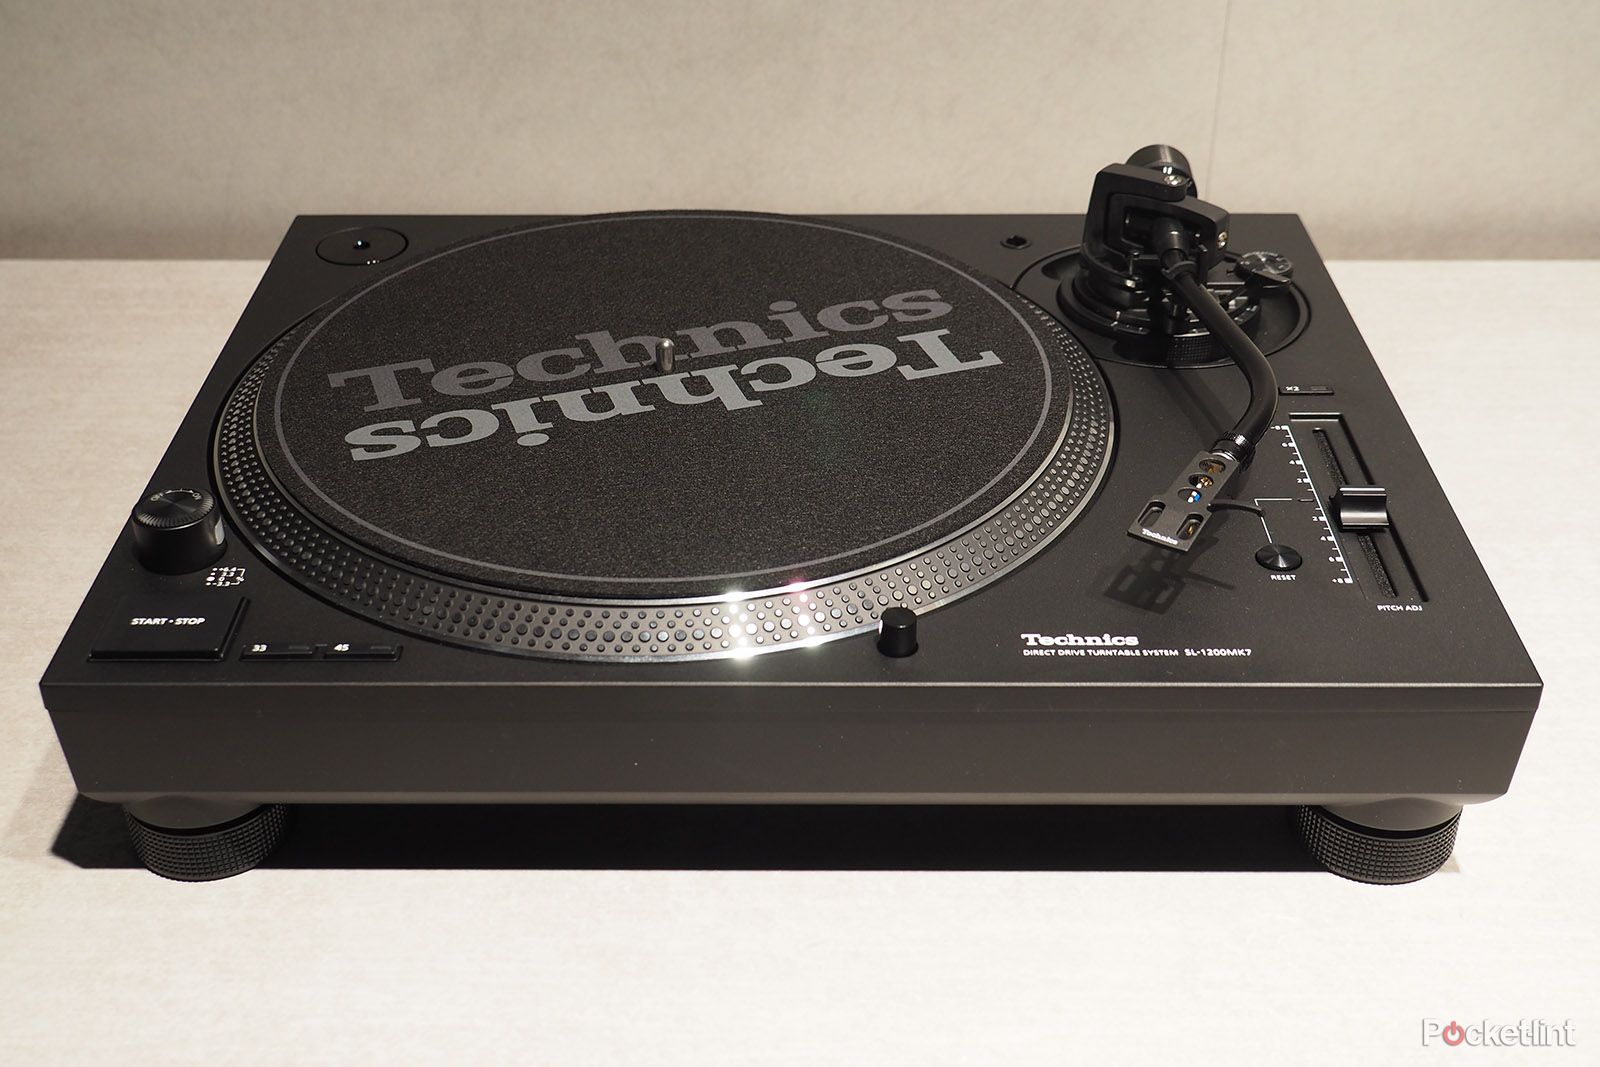 Technics SL-1200 MK7 in pictures: The DJ turntable returns